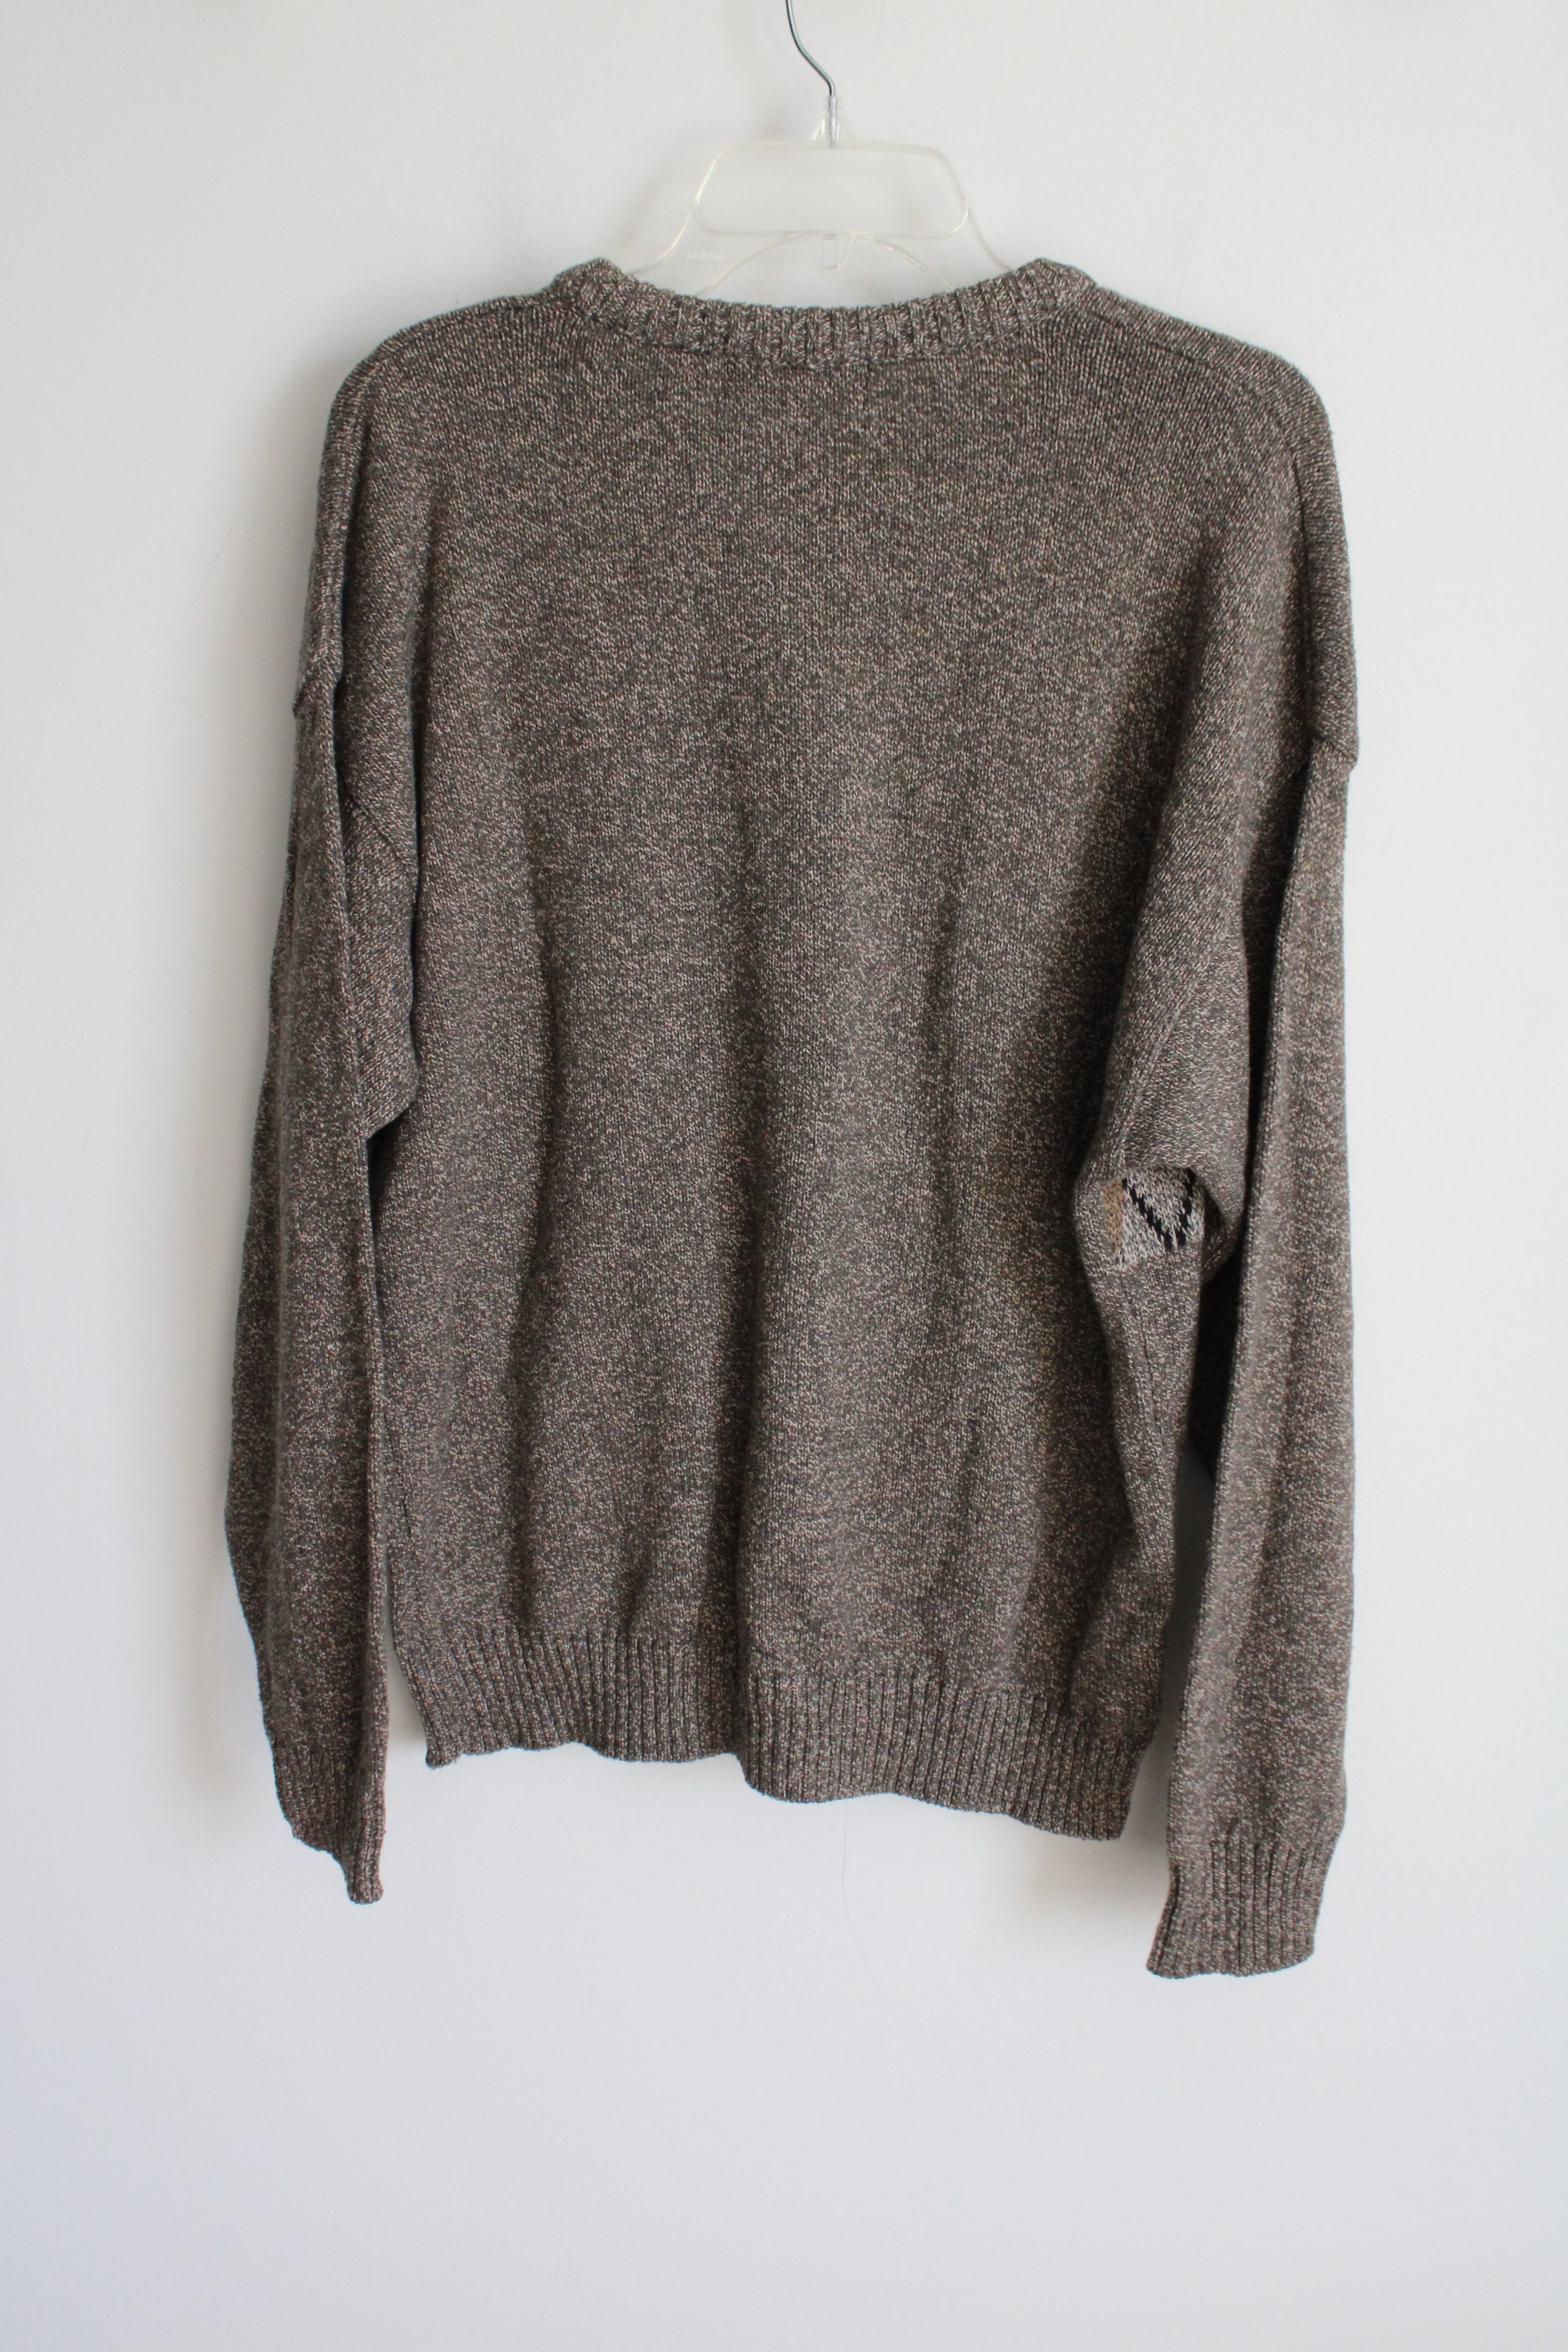 David Taylor Vintage Argyle Sweater | M